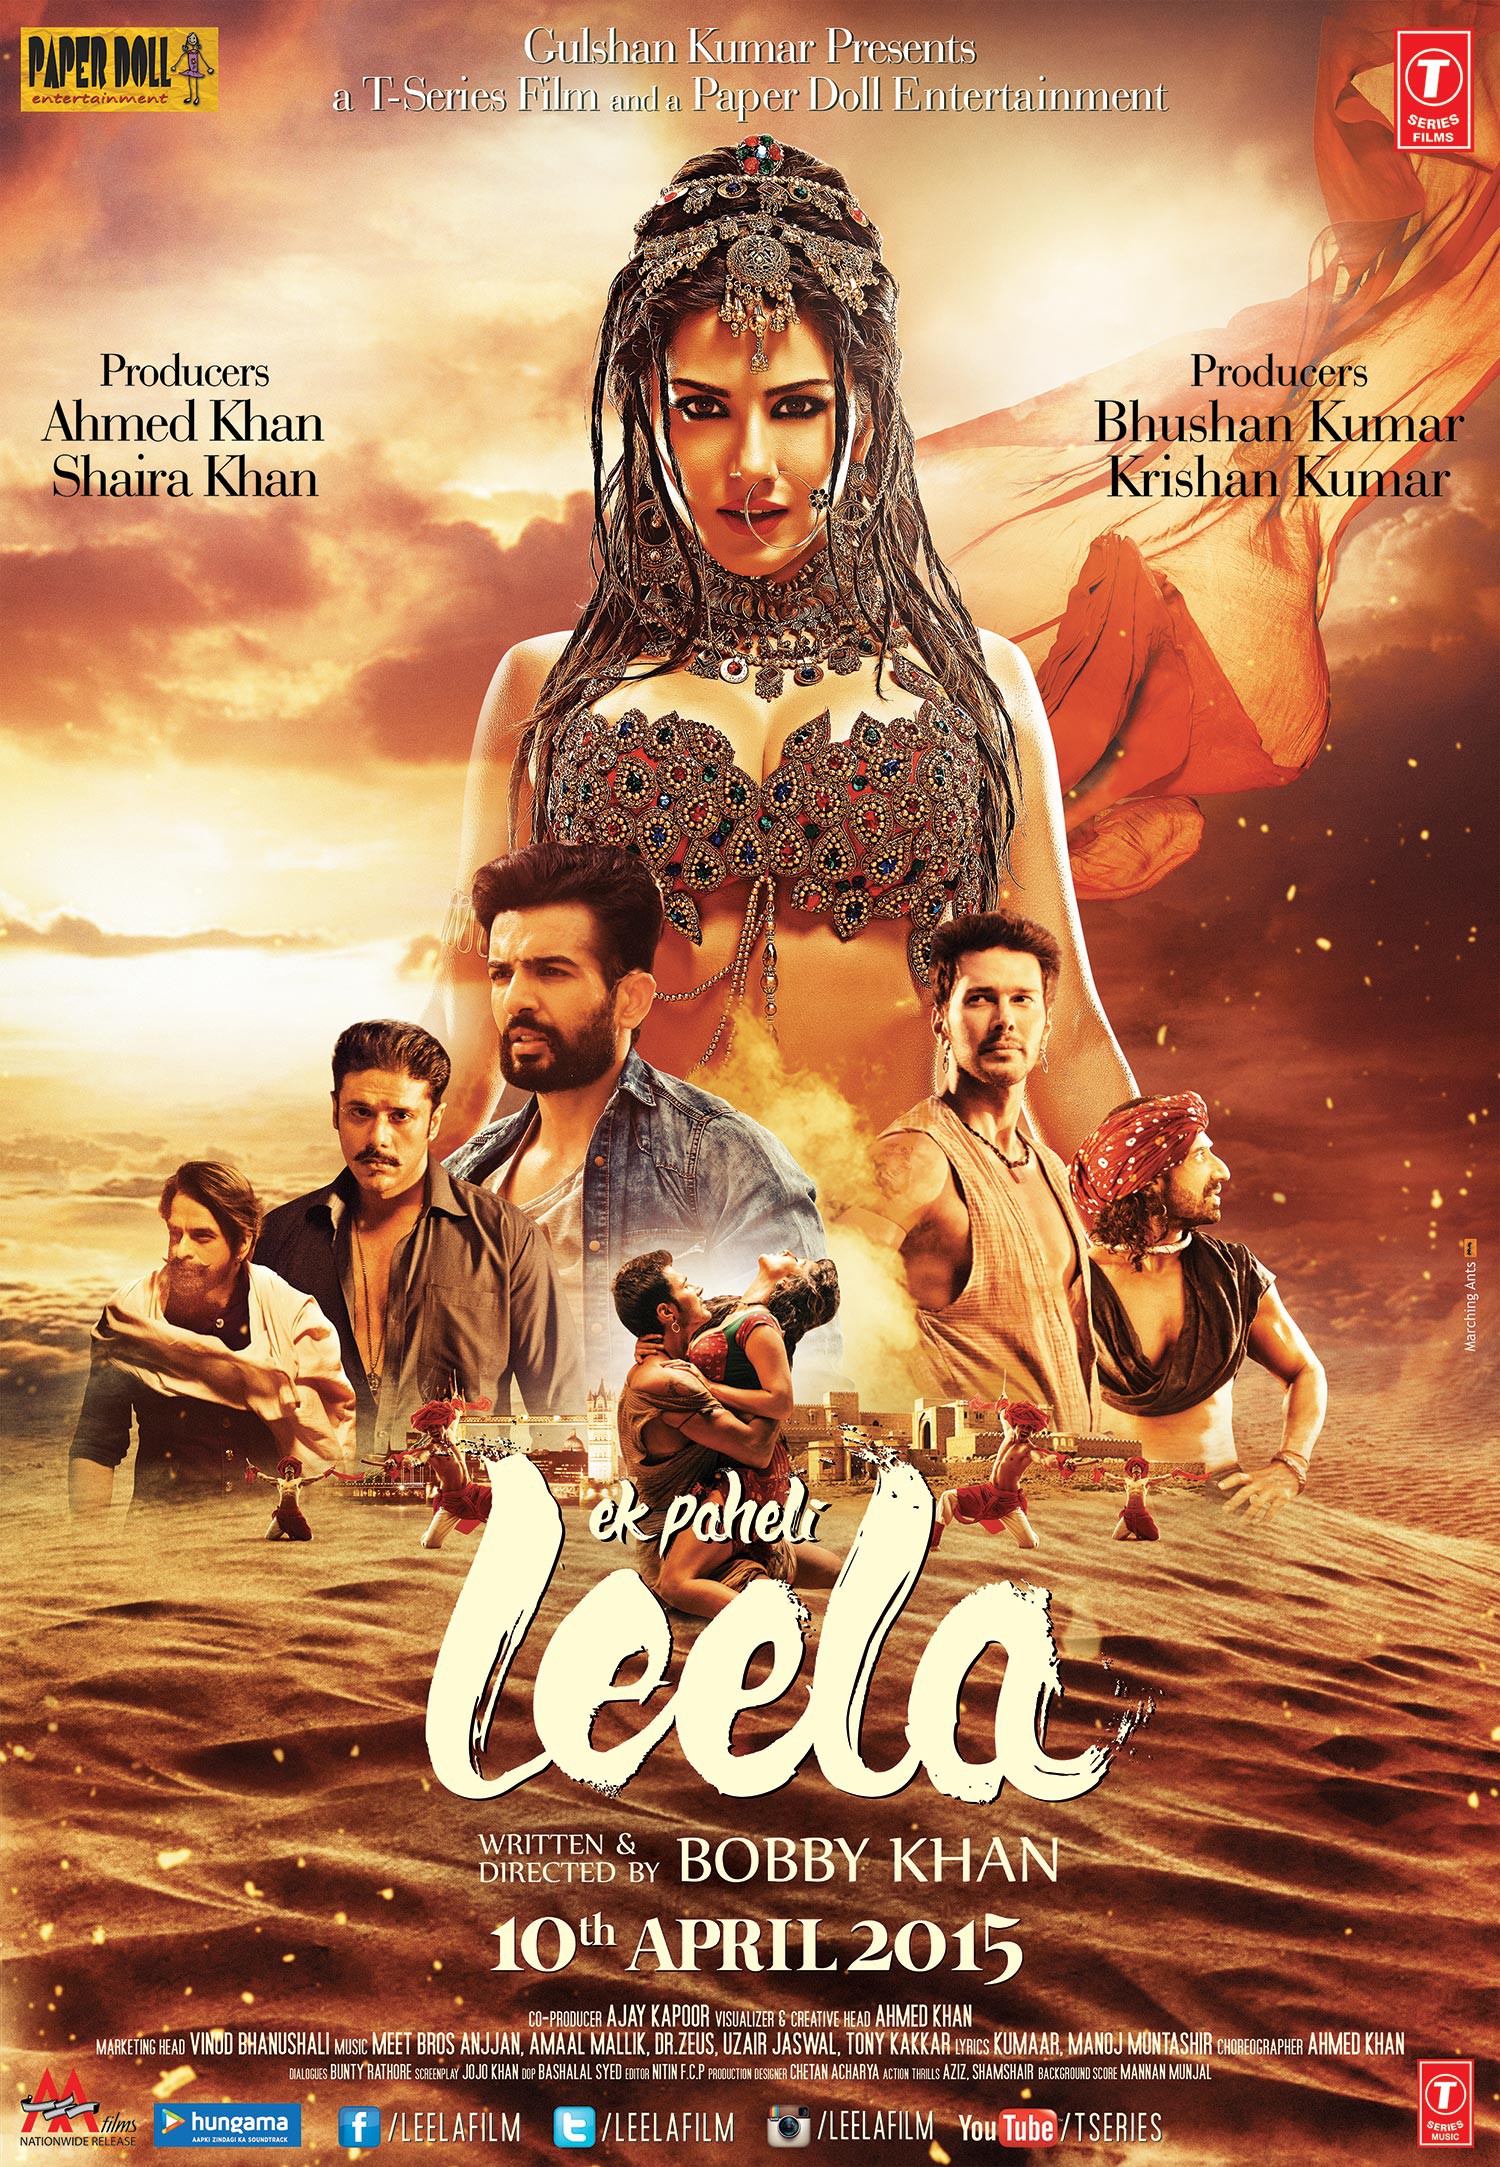 Mega Sized Movie Poster Image for Ek Paheli Leela (#3 of 4)